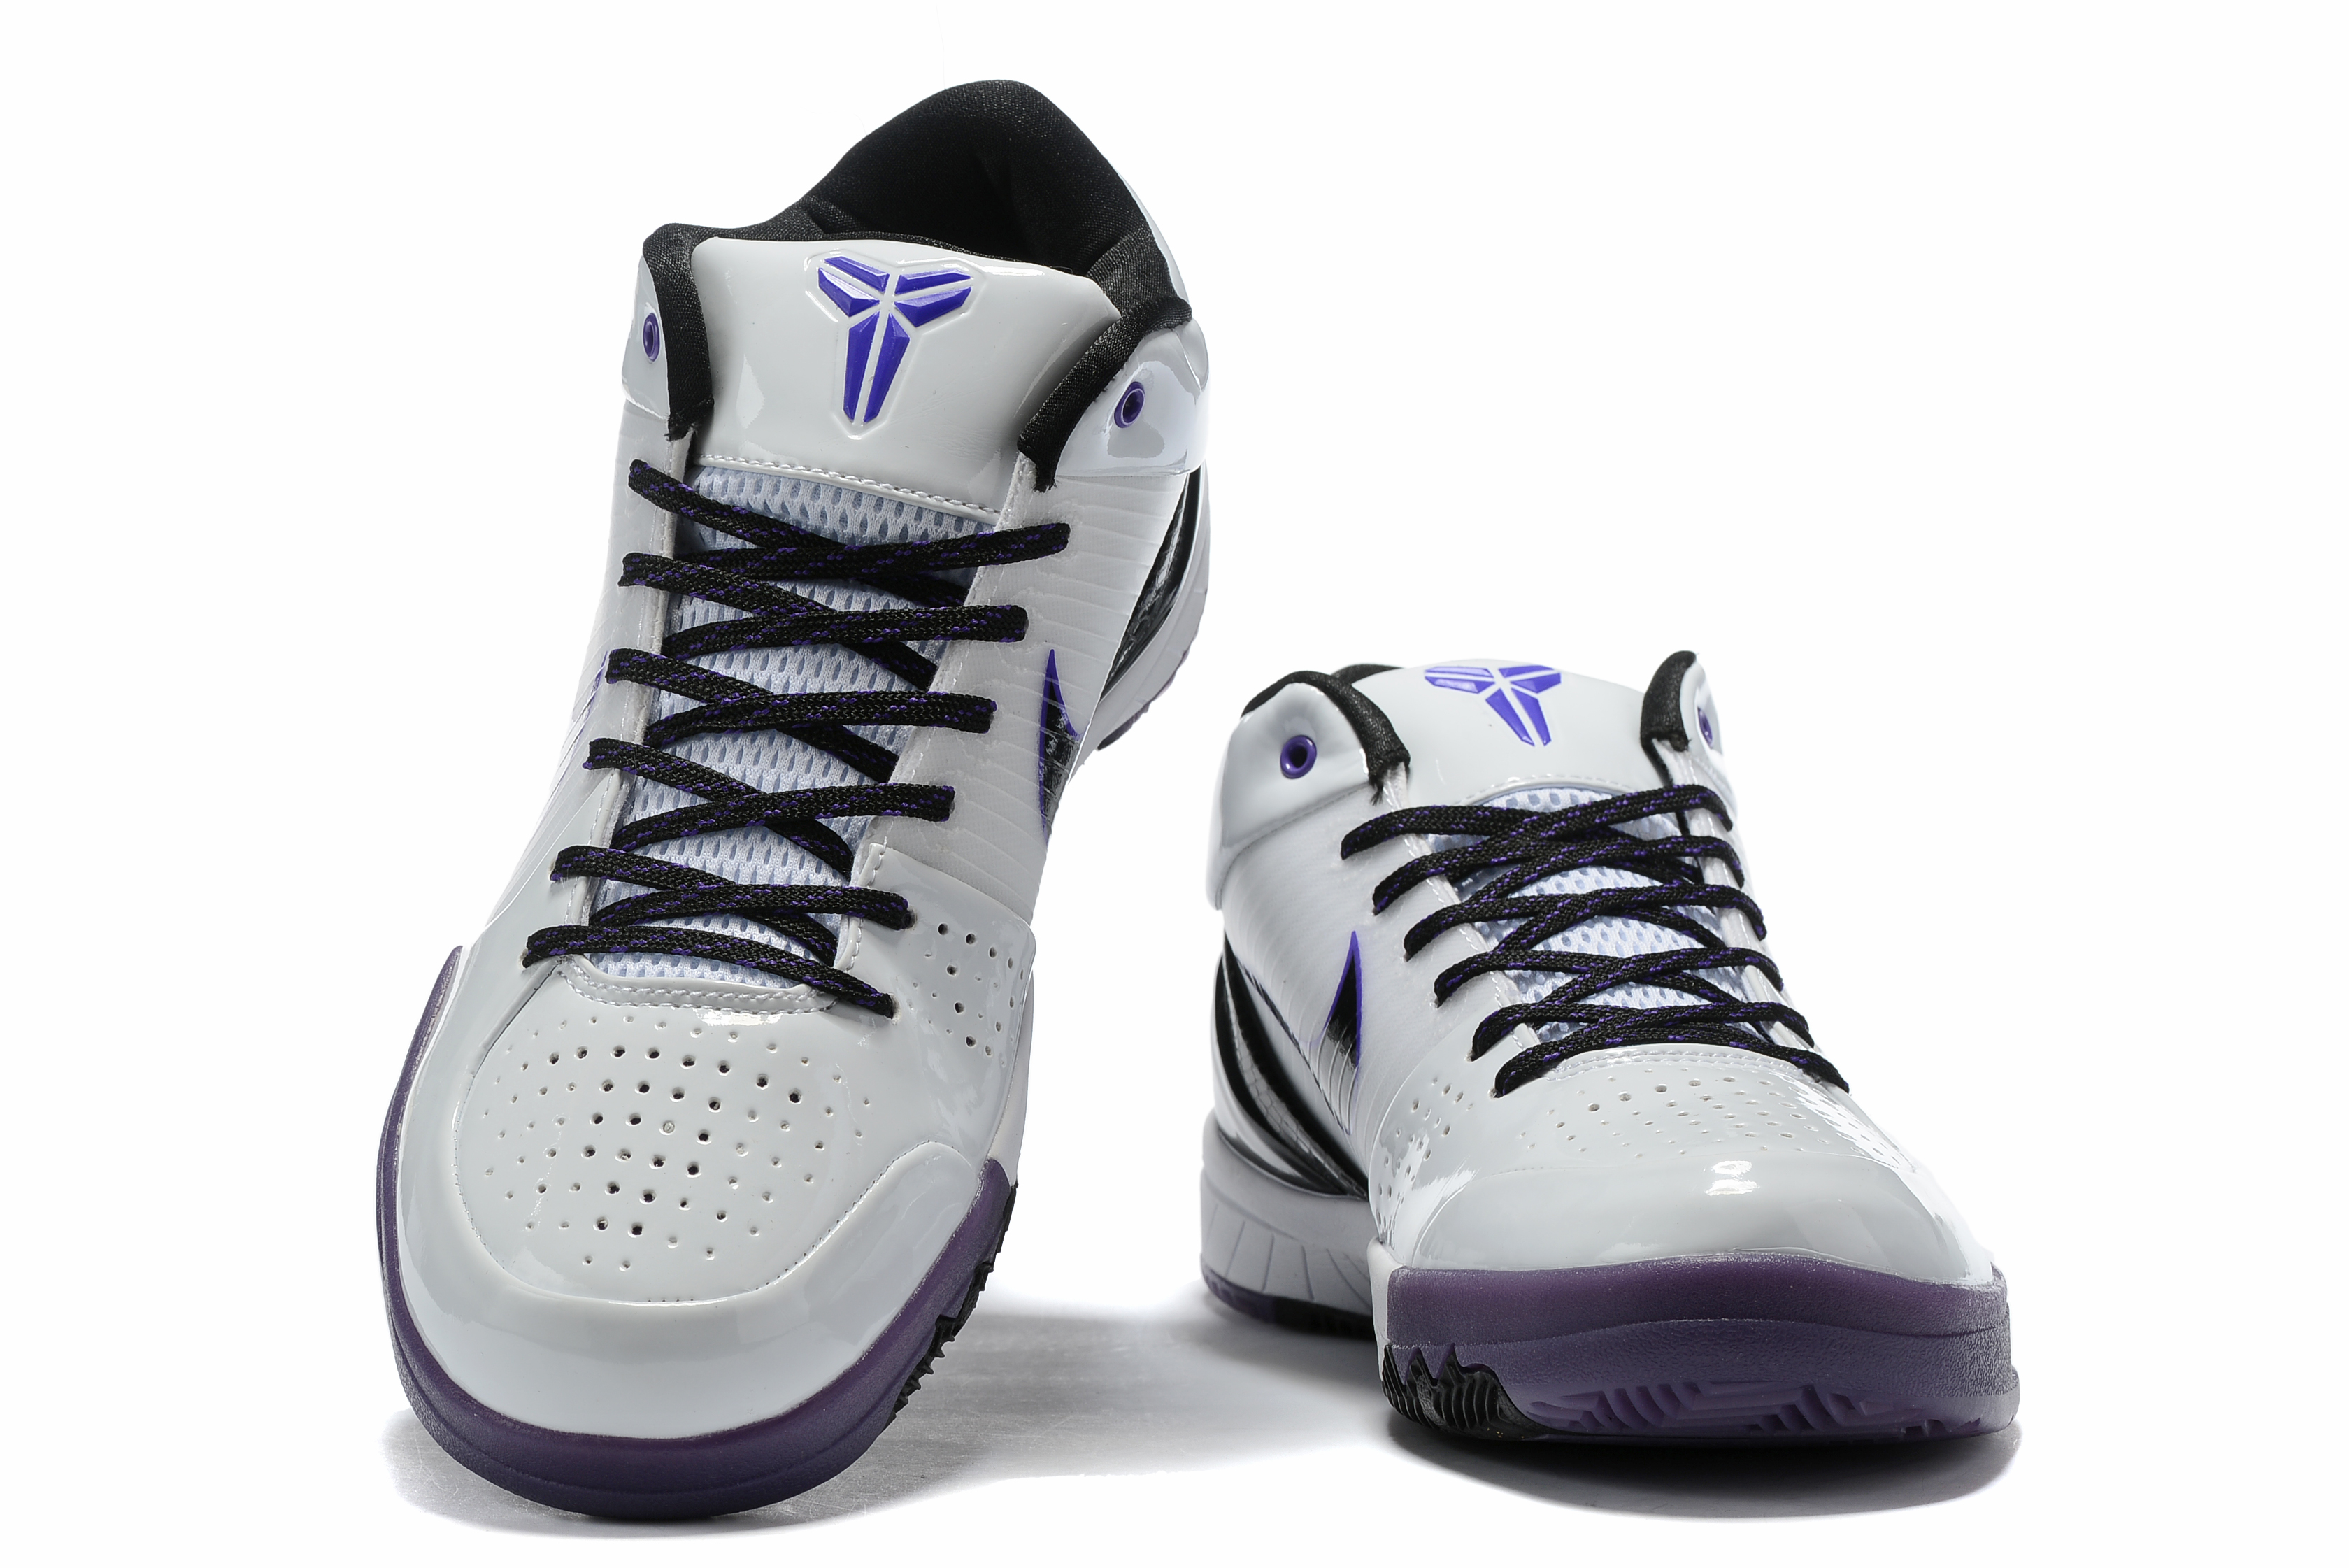 New Nike Kobe Bryant IV White Purple Black Shoes